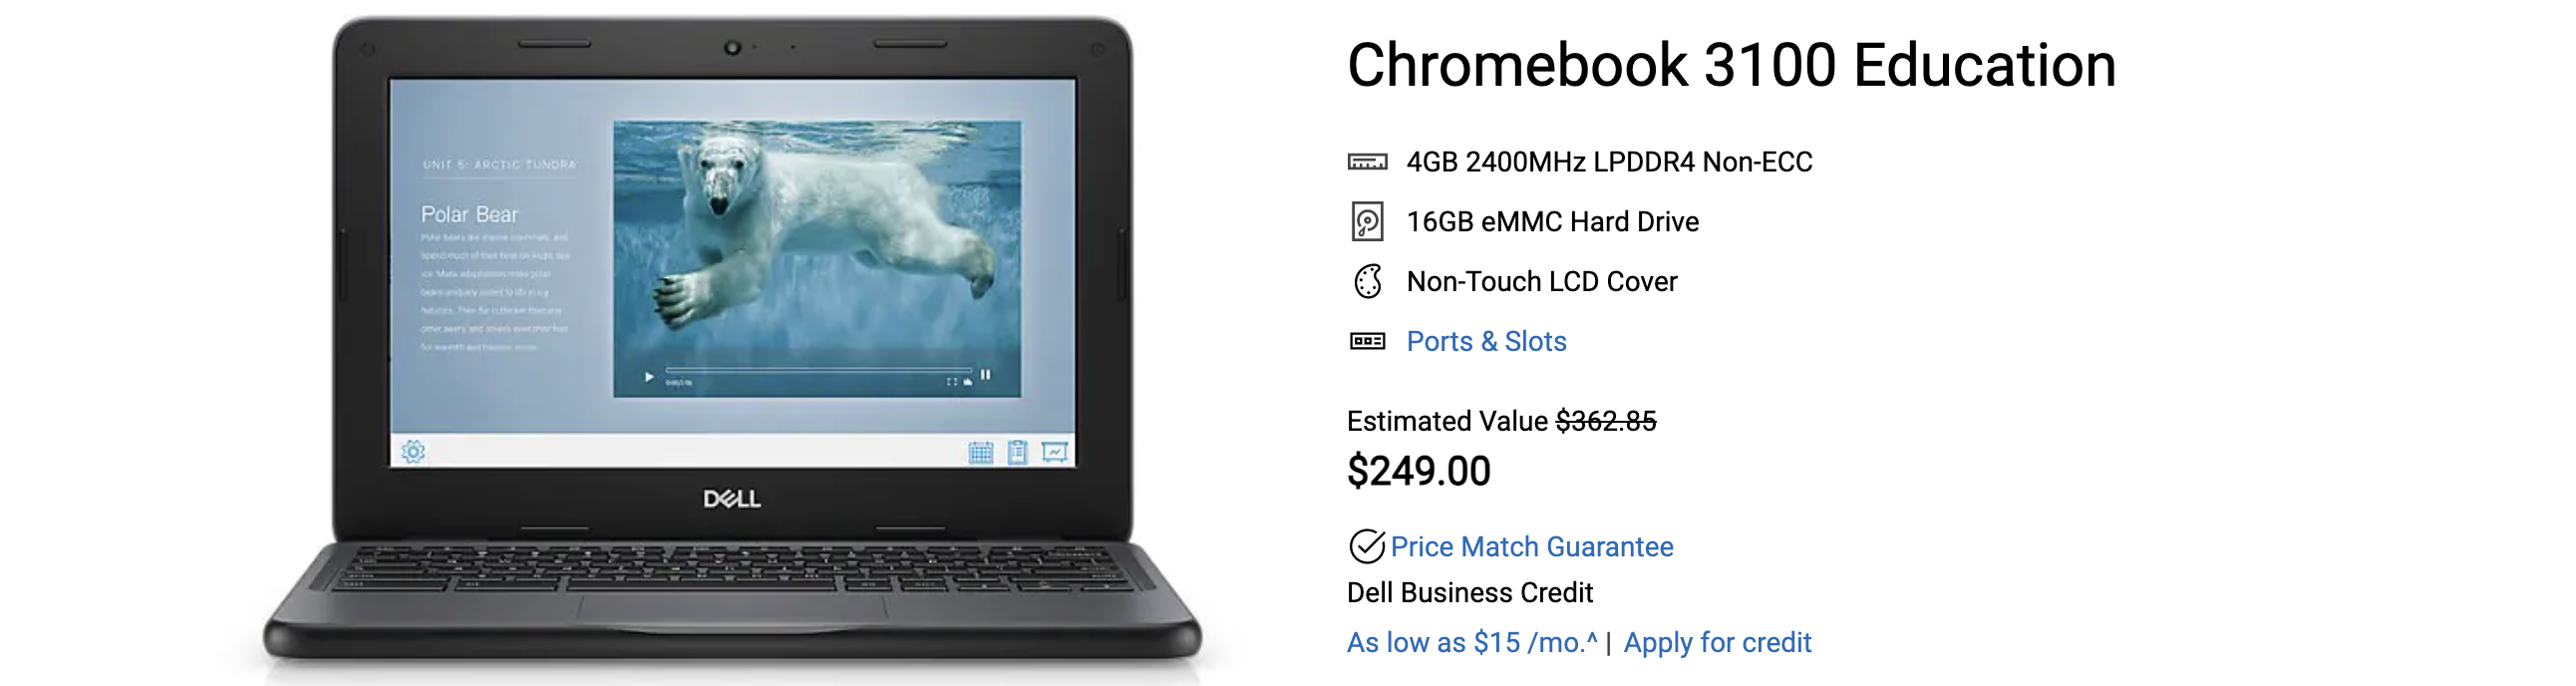 The Dell Chromebook 3100